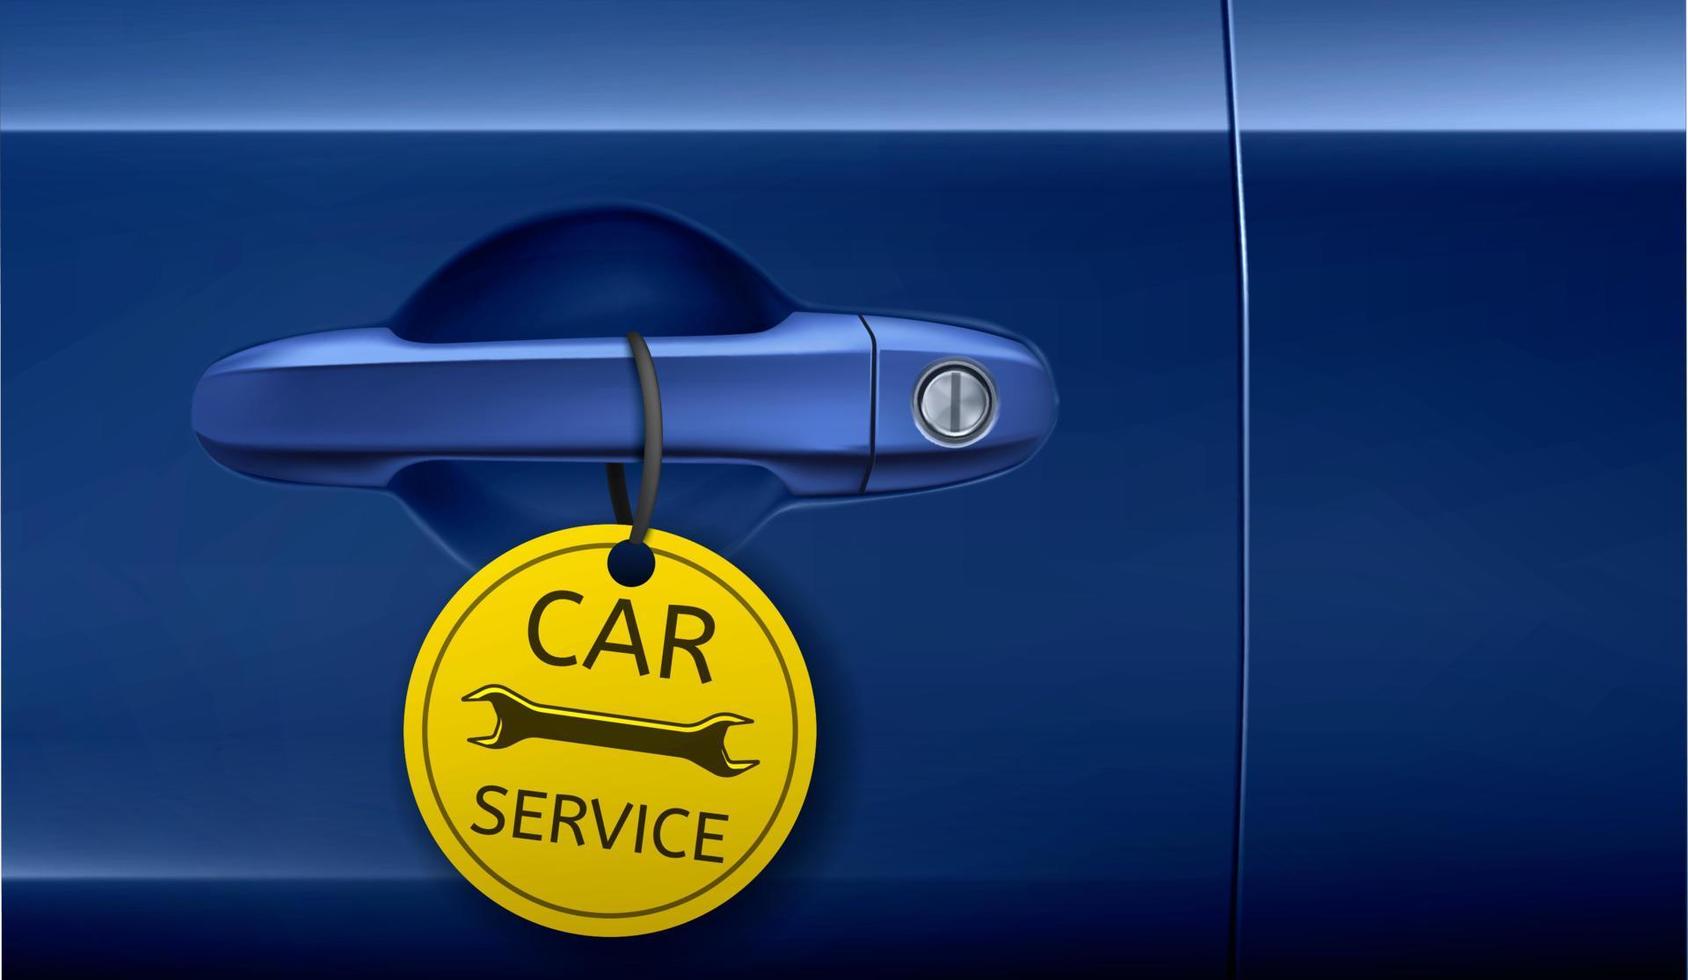 auto onderhoud advertentie banier, deur omgaan met met geel label vector